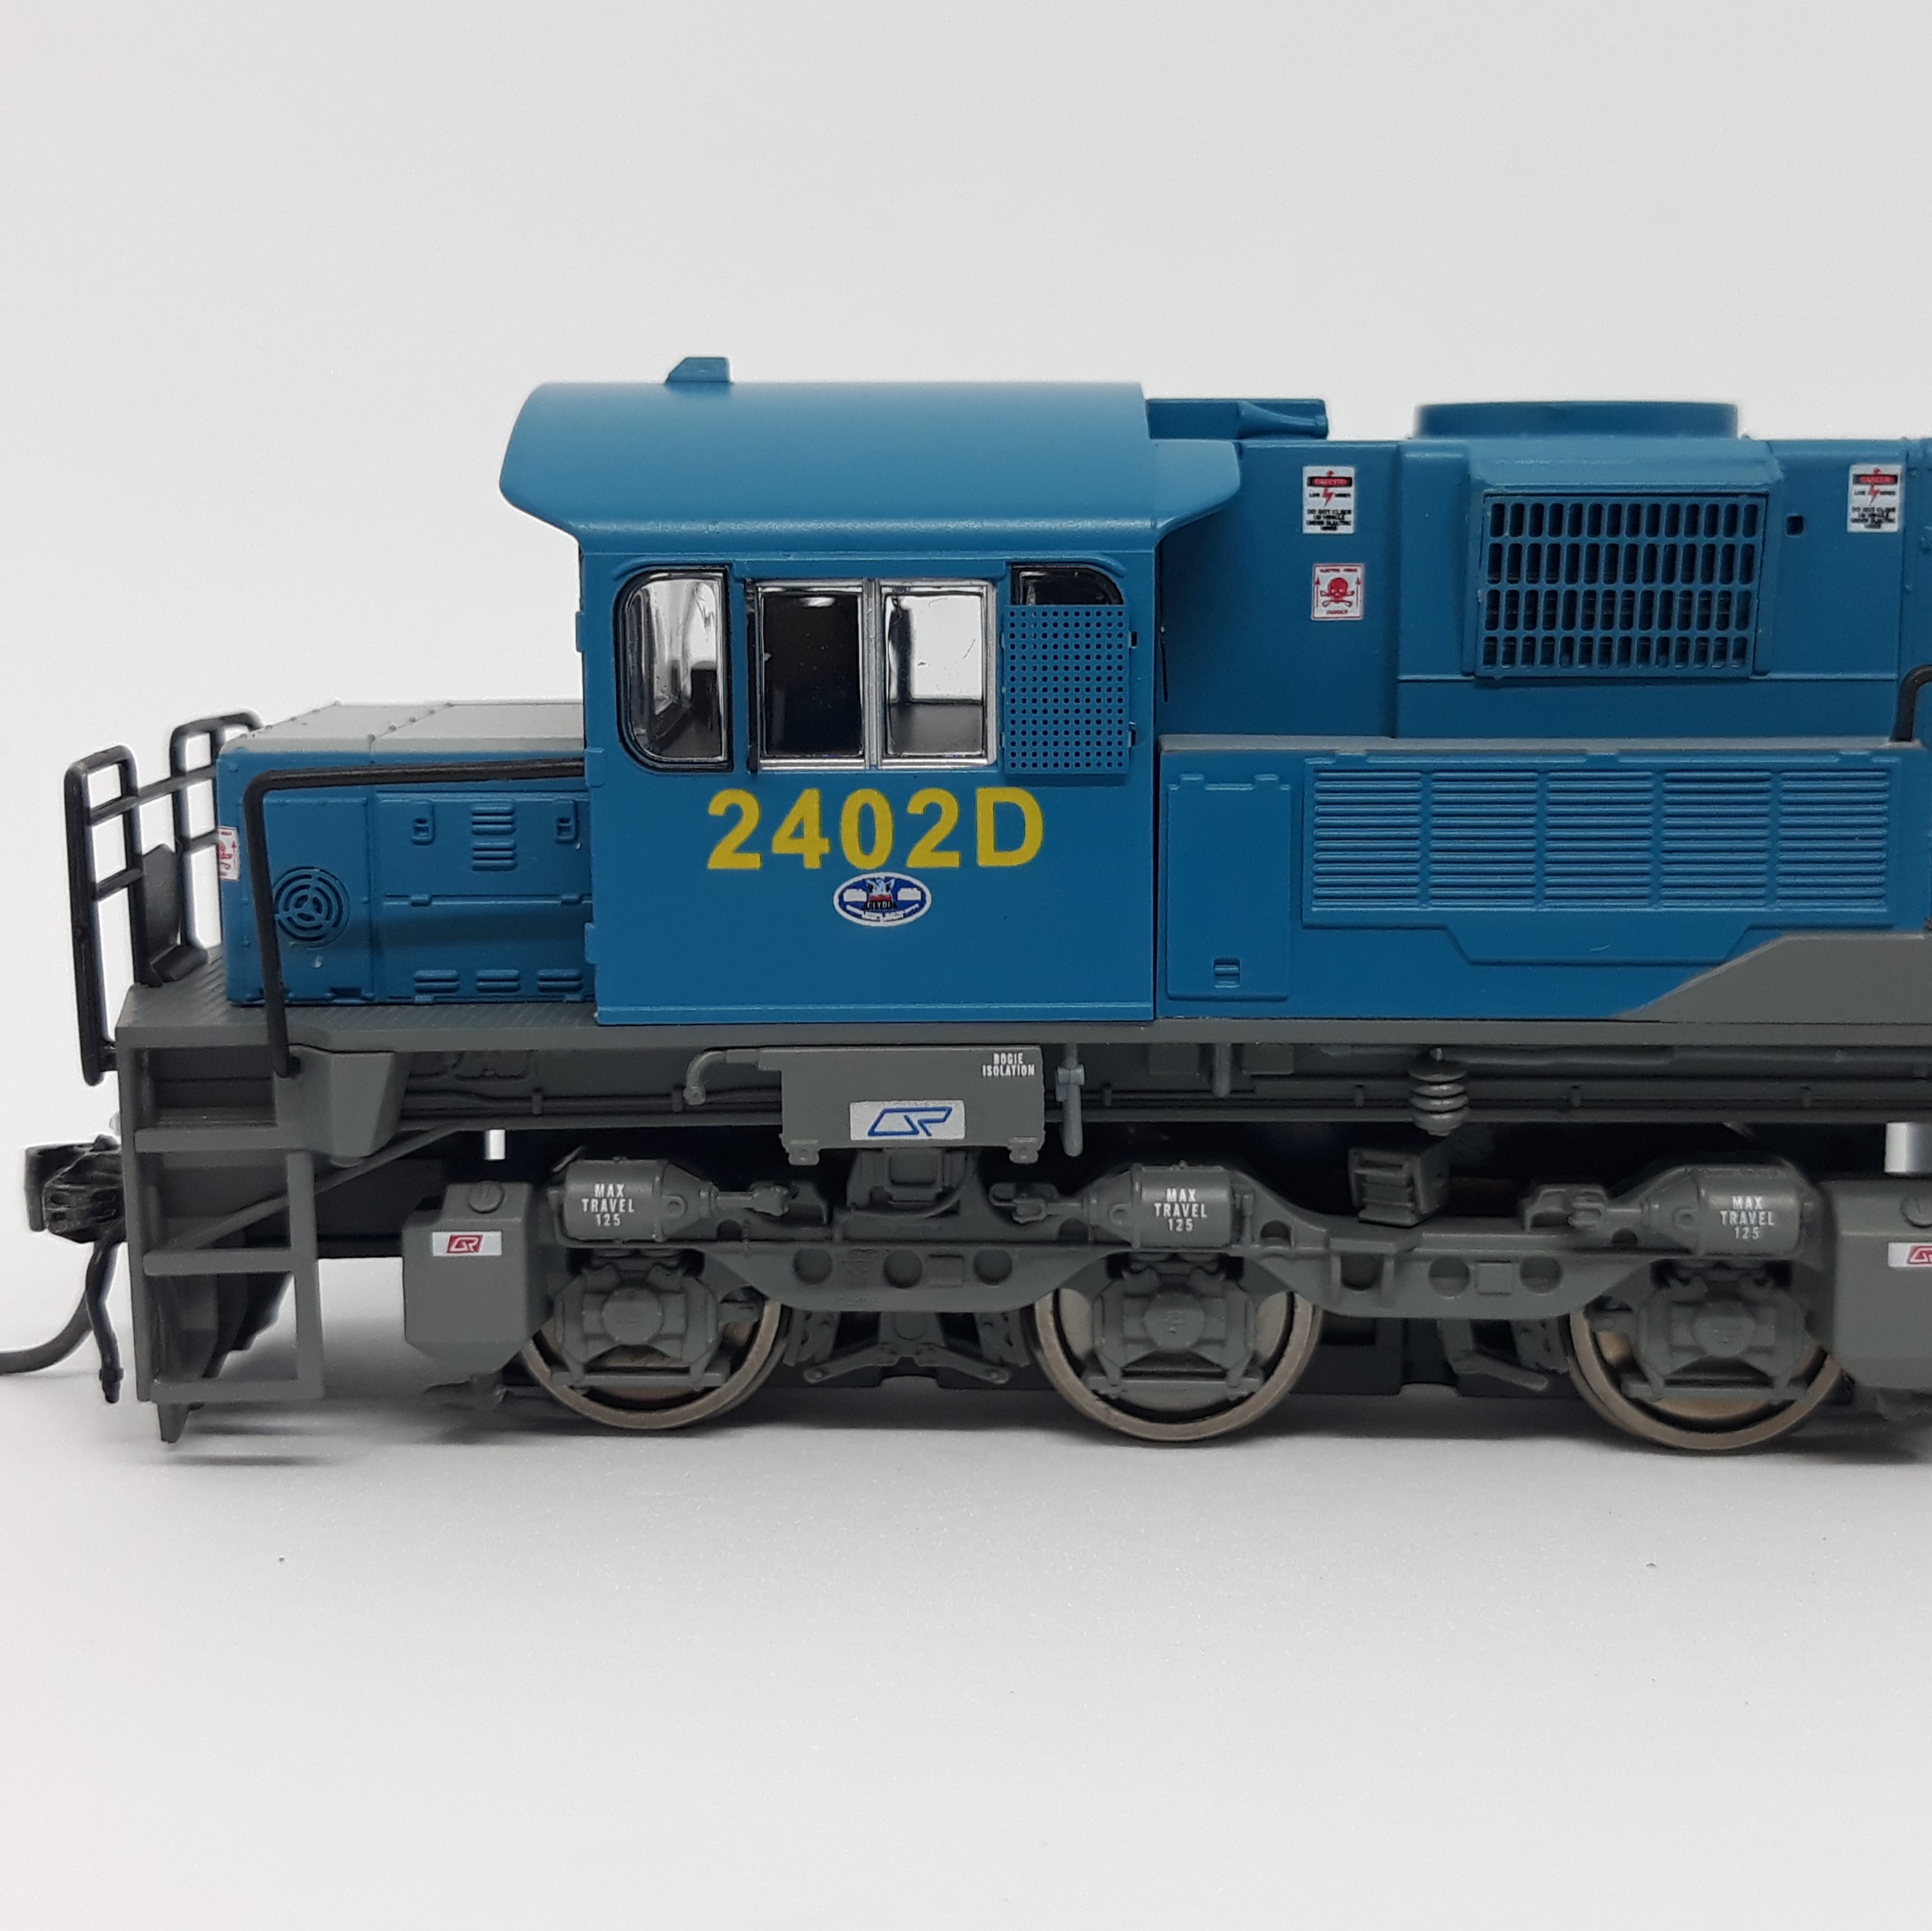 RTR037 2400 Class Locomotive #2402D HOn3½